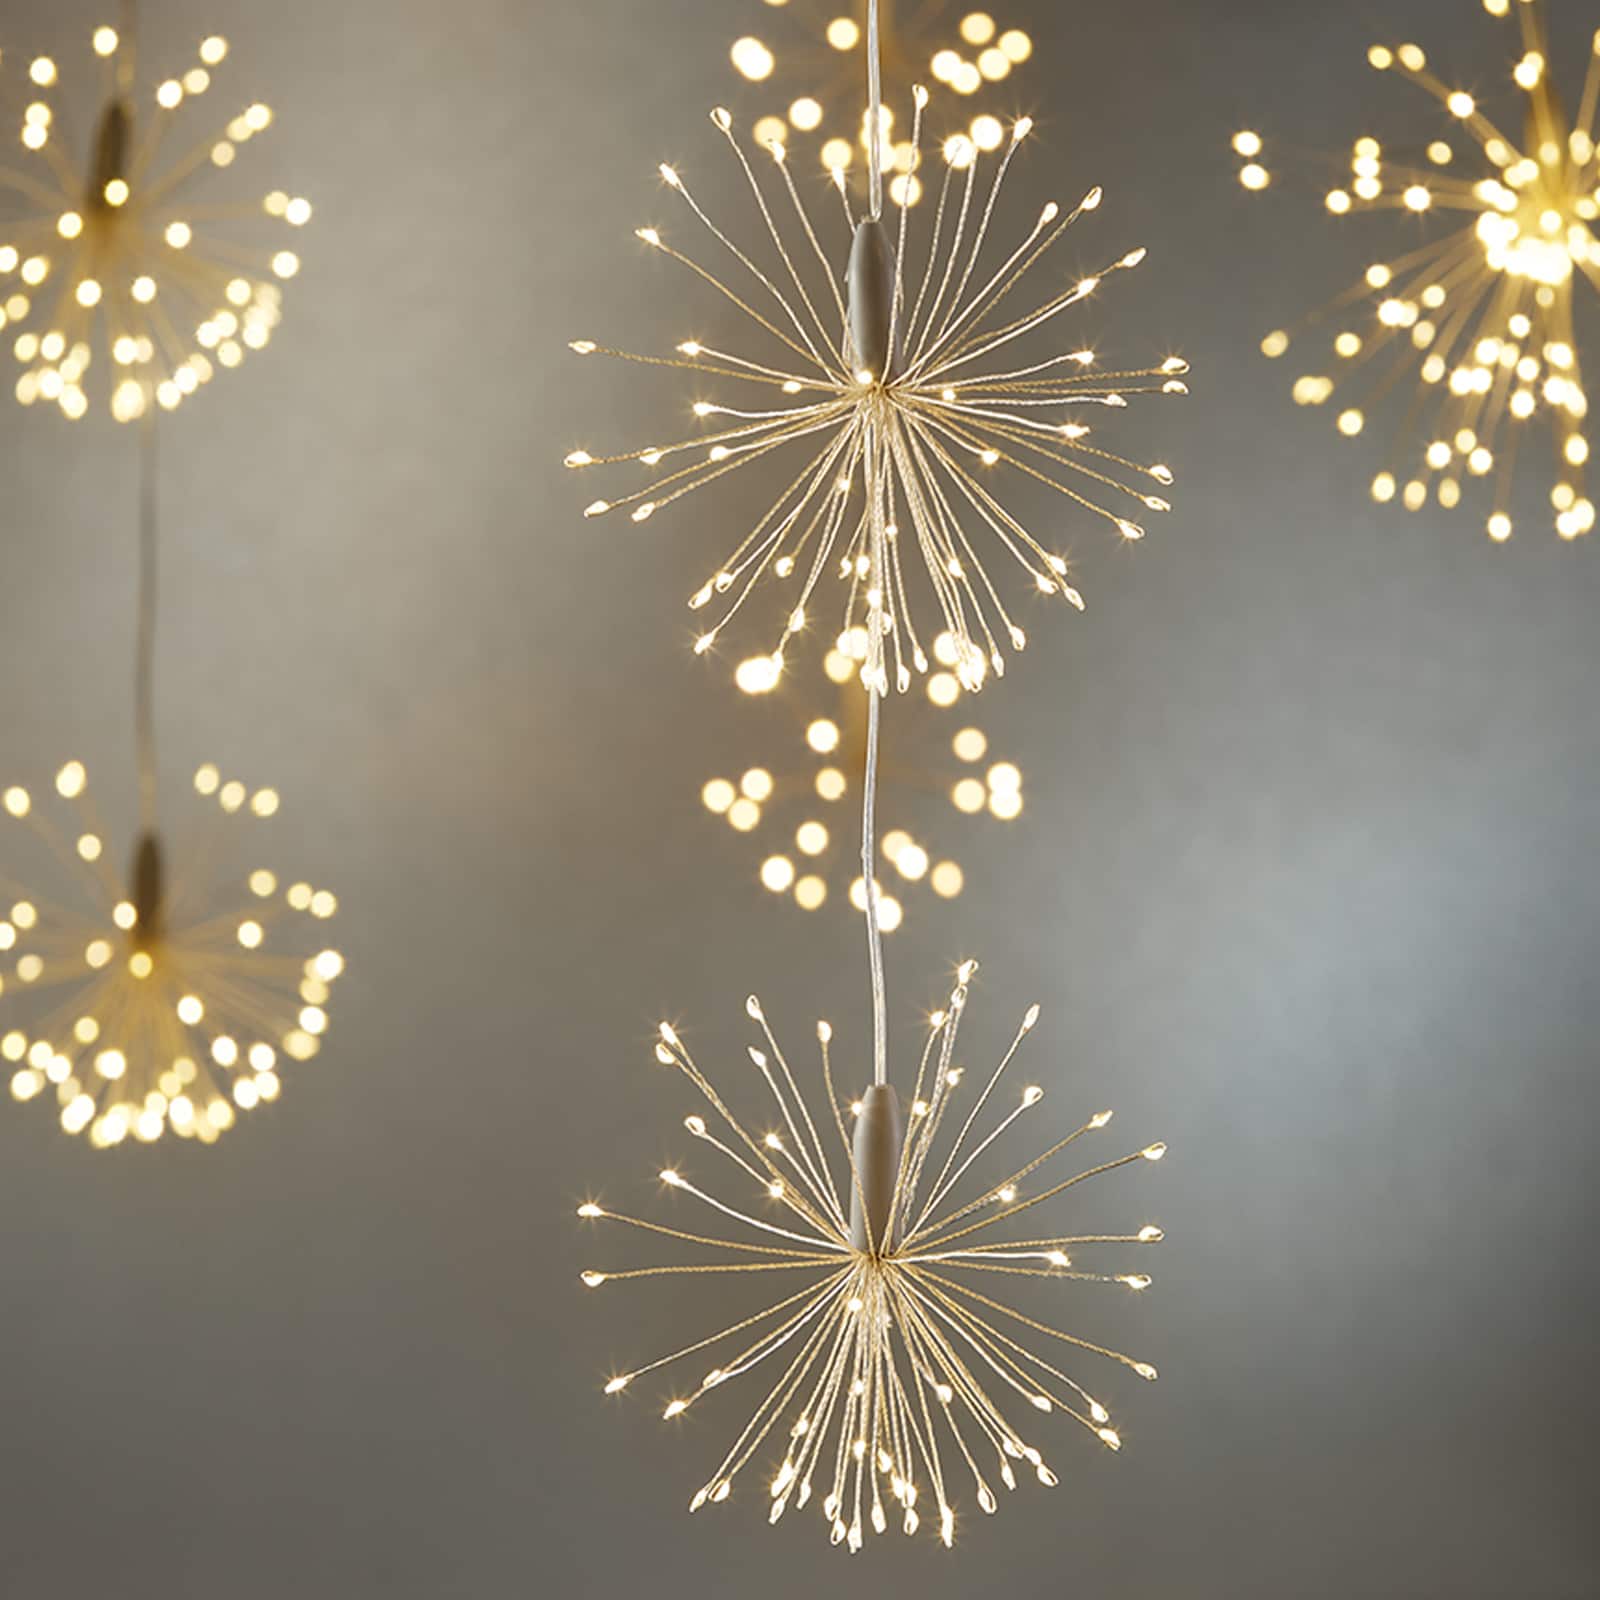 6 Starburst Fixtures each with 25 Lights Starburst LED Fairy String Lights 